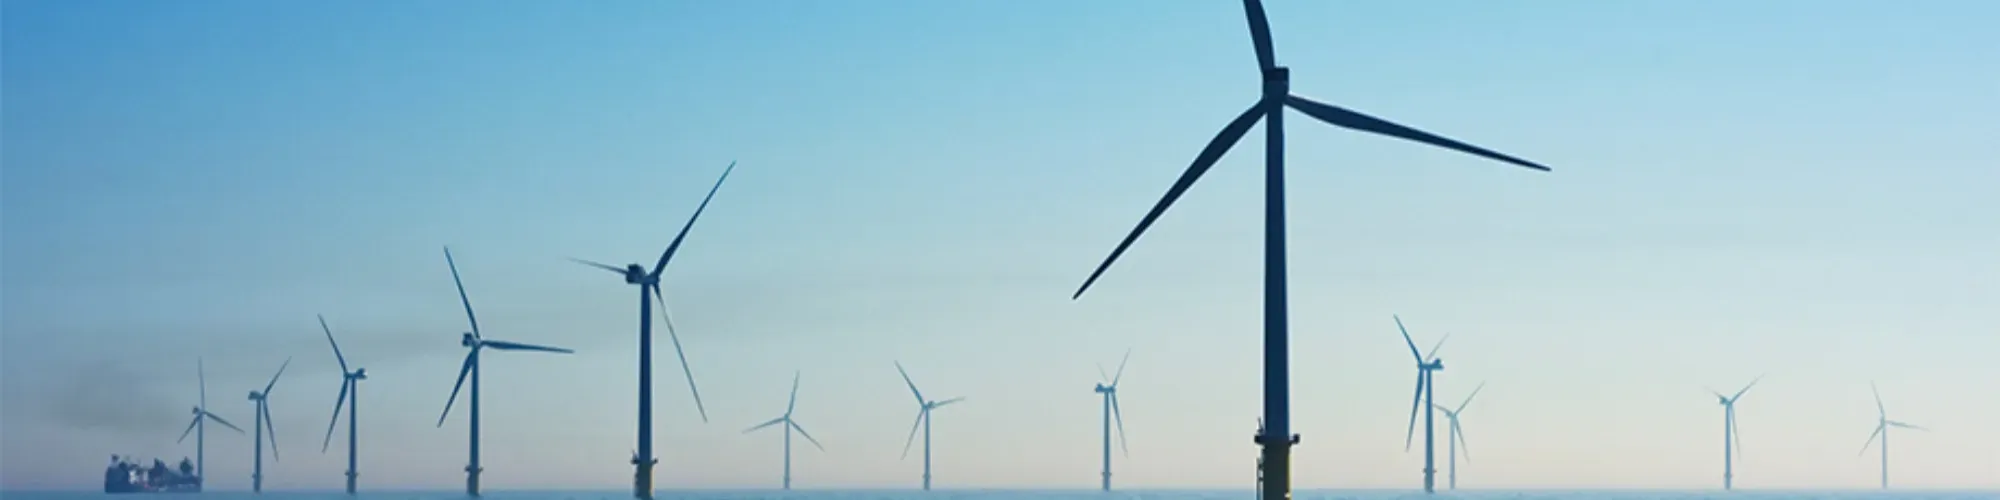 Wind turbines in the UK producing renewable energy